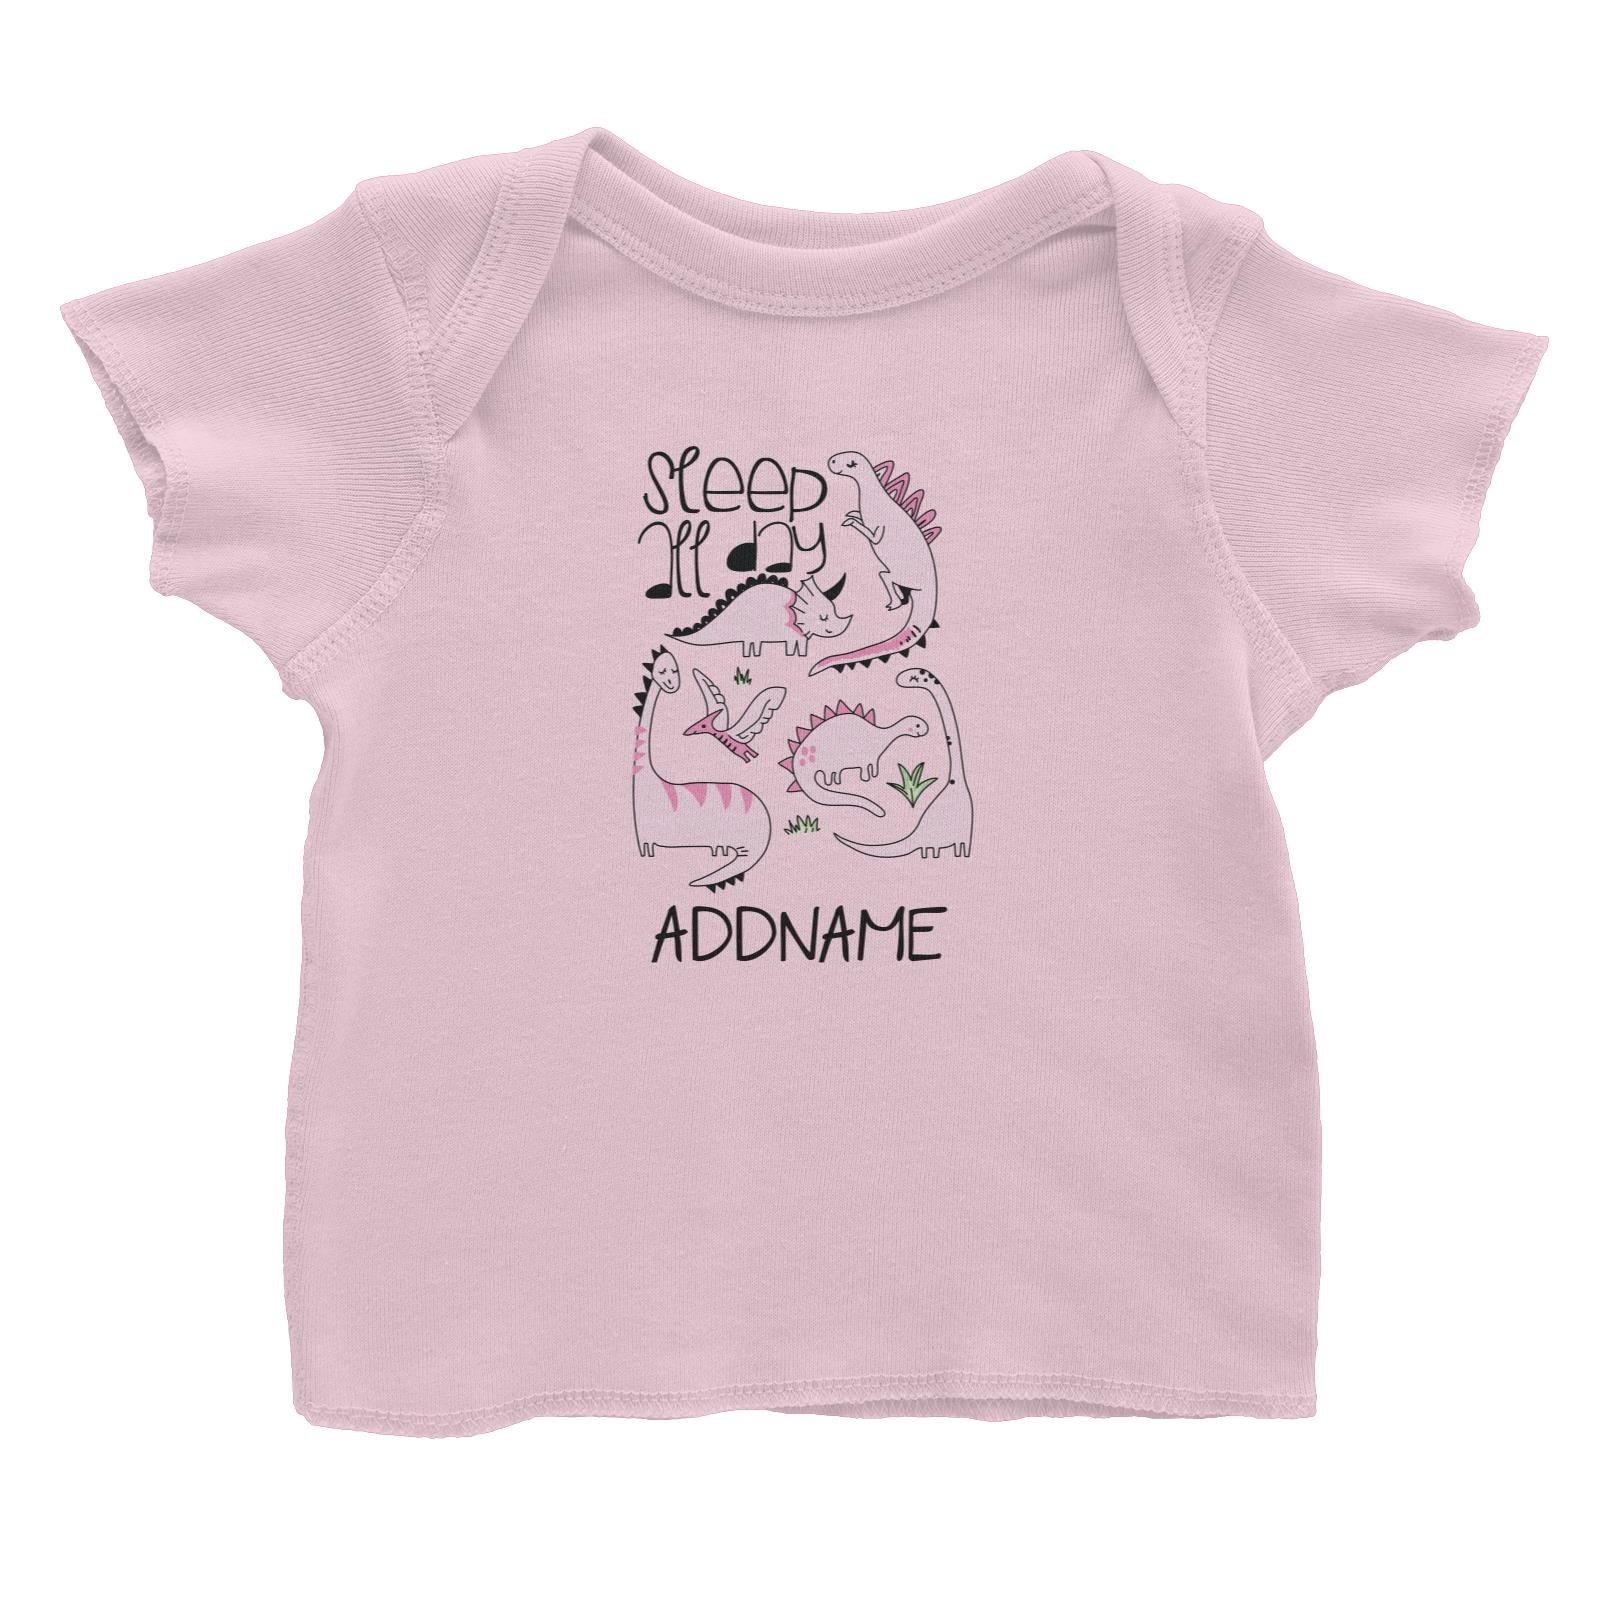 Cool Vibrant Series Sleep All Day Dinosaur Addname Baby T-Shirt